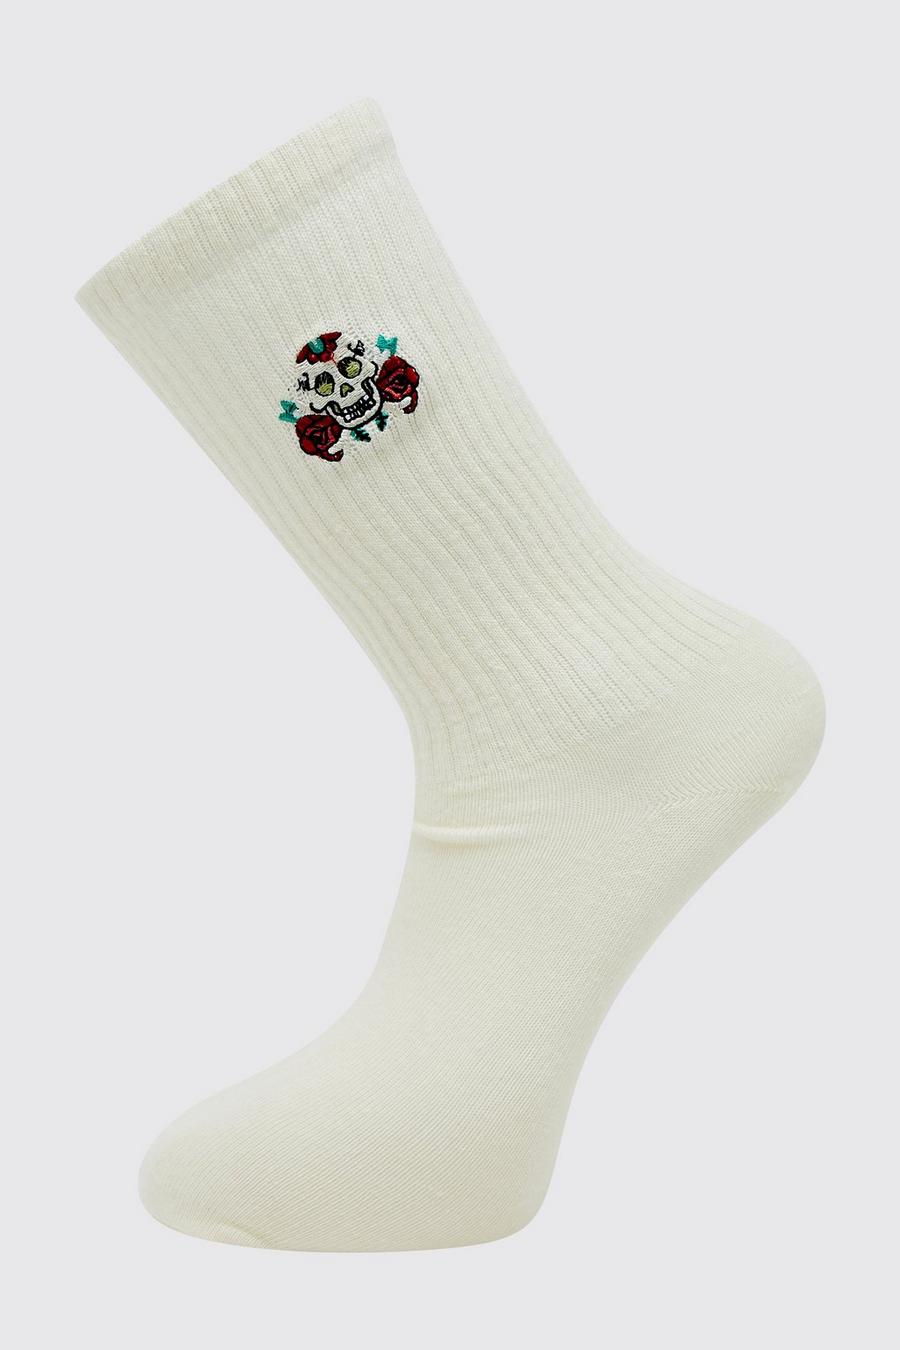 Ecru white 1 Pack Embroidery Floral Skull Sock